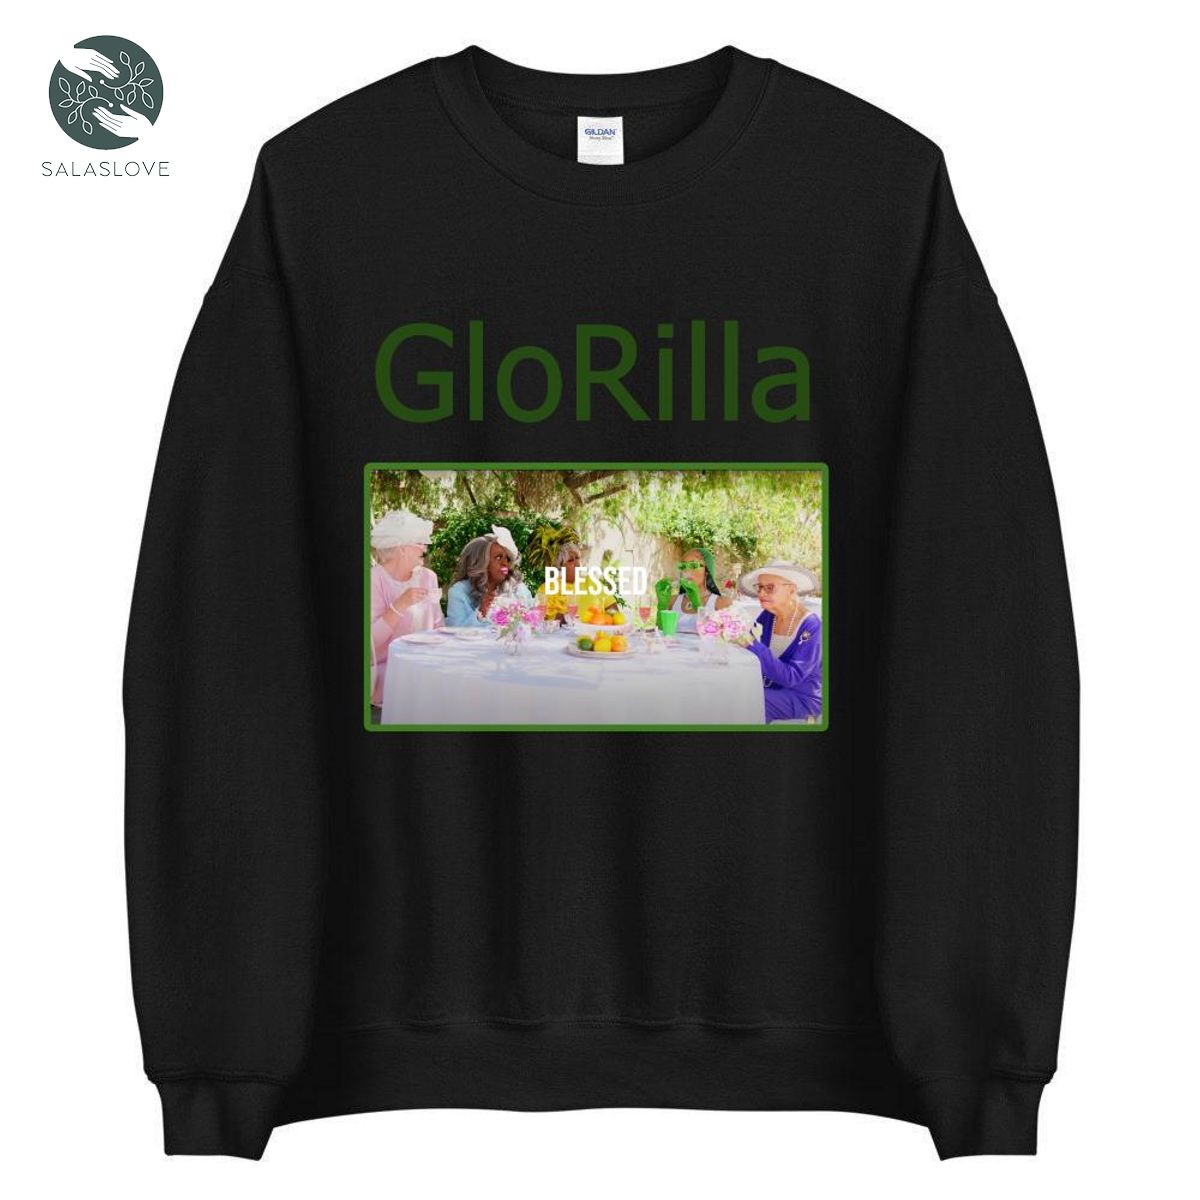 Blessed - Glorilla New Single Music Shirt